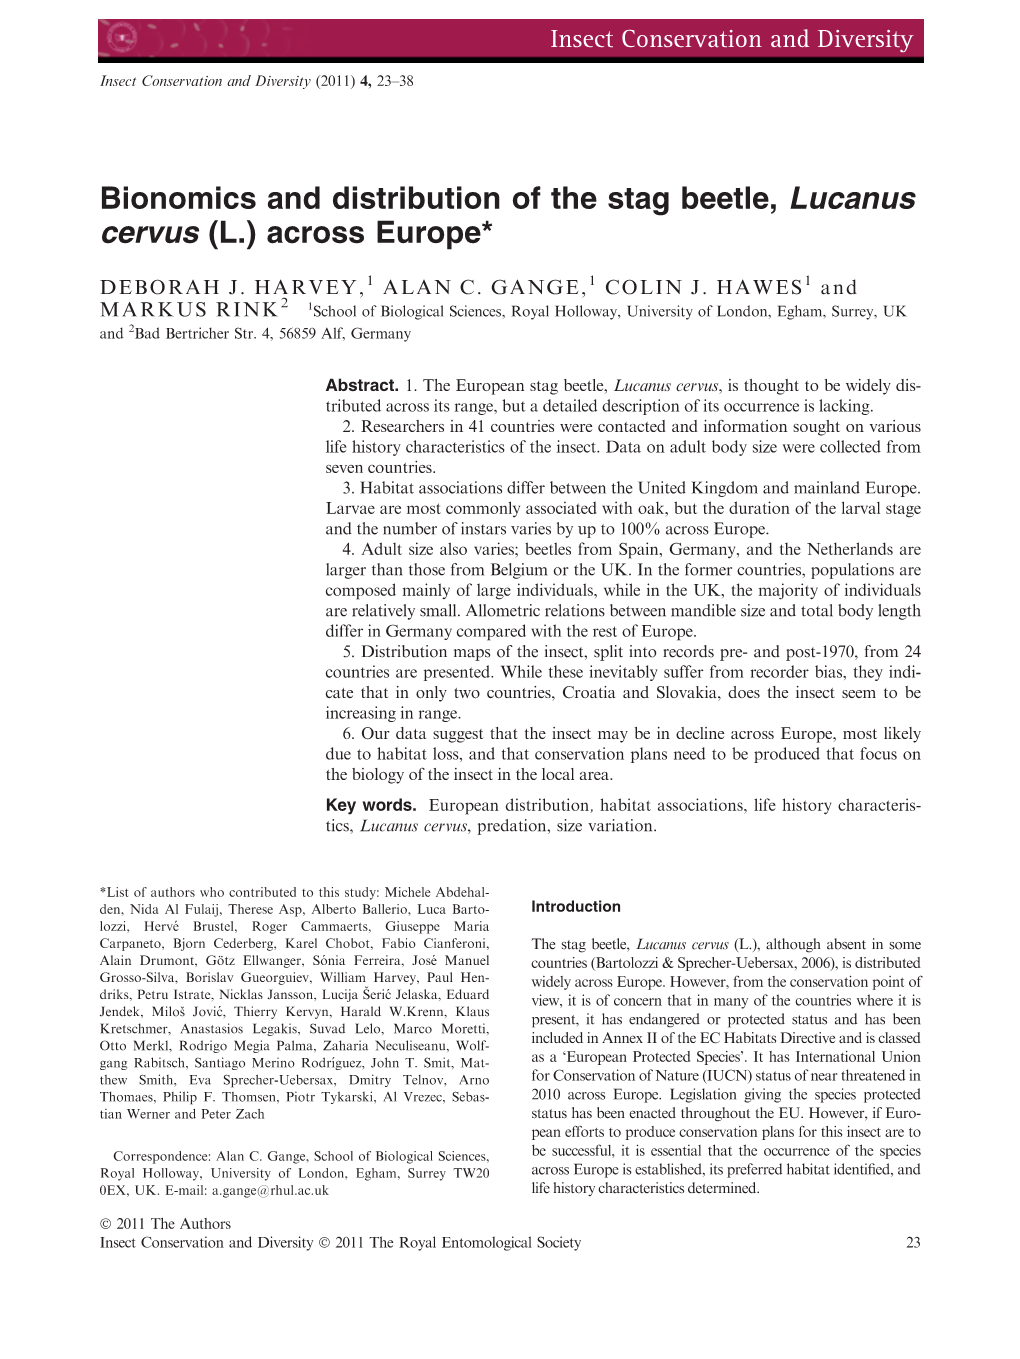 Bionomics and Distribution of the Stag Beetle, Lucanus Cervus (L.) Across Europe*